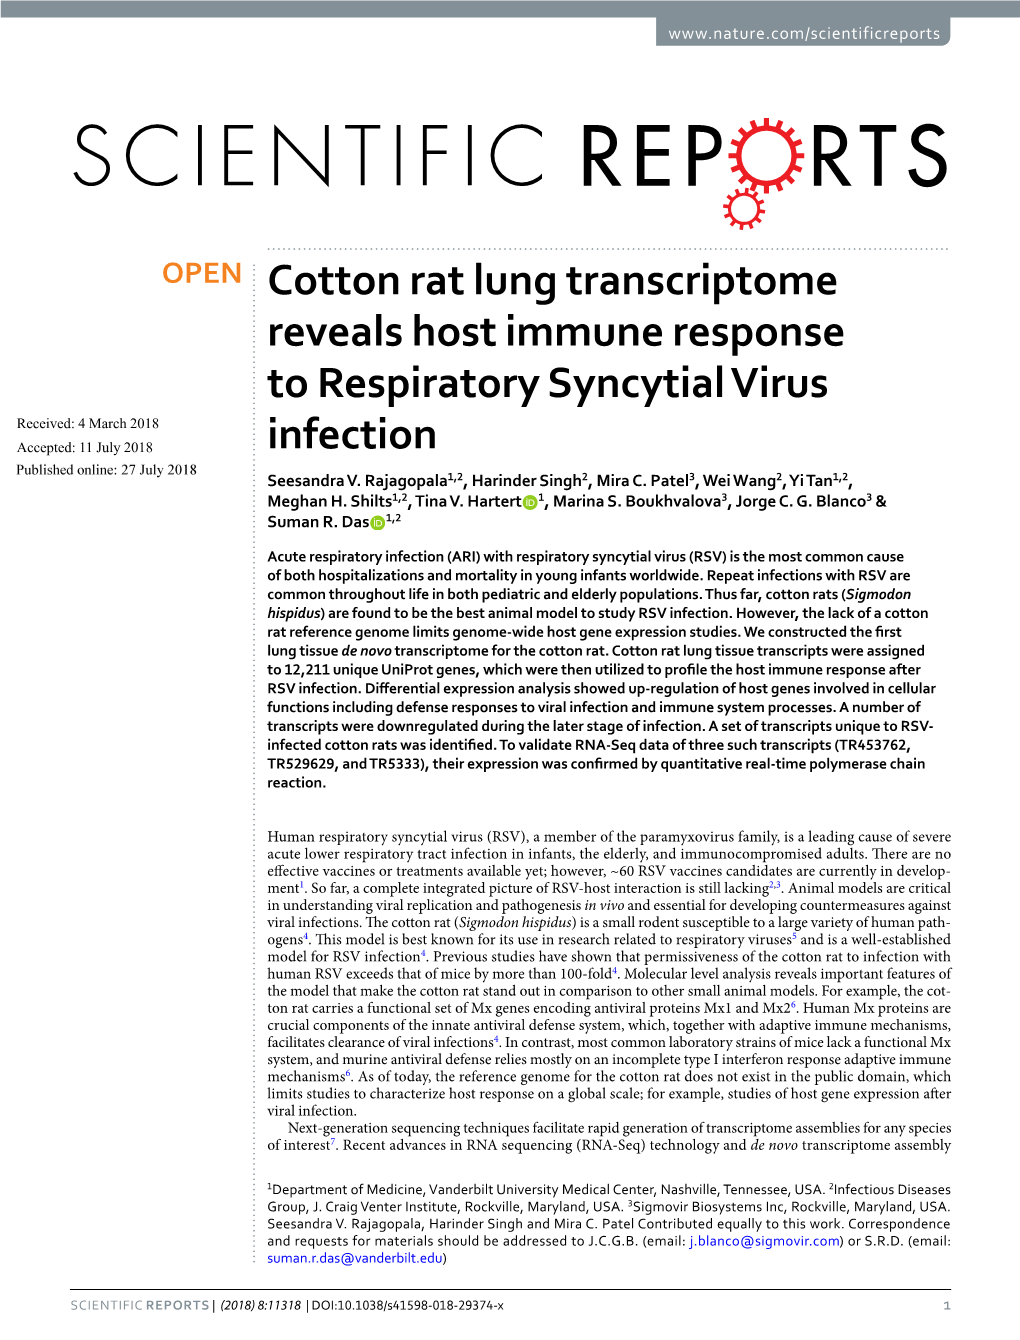 Cotton Rat Lung Transcriptome Reveals Host Immune Response To